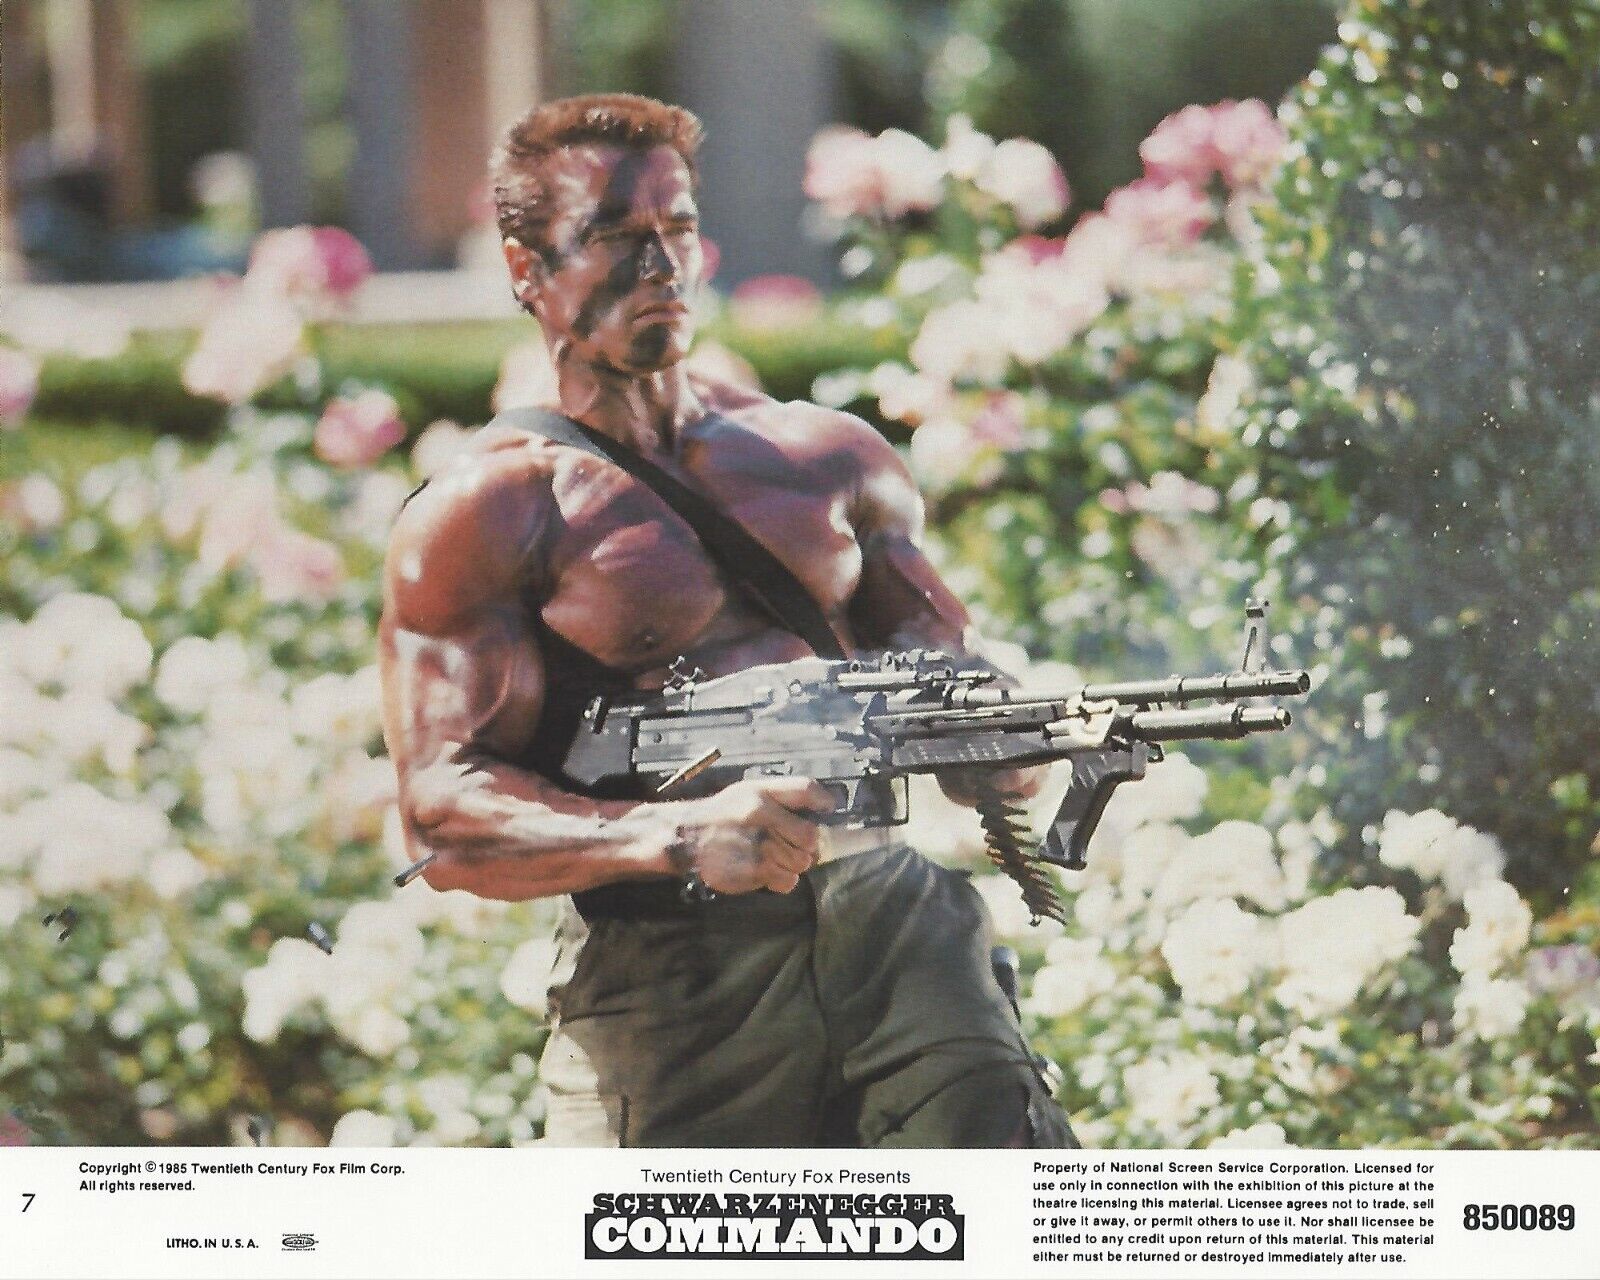 Commando Original 8x10 Lobby Card Poster 1985 Photo Poster painting #7 Arnold Schwarzenegger